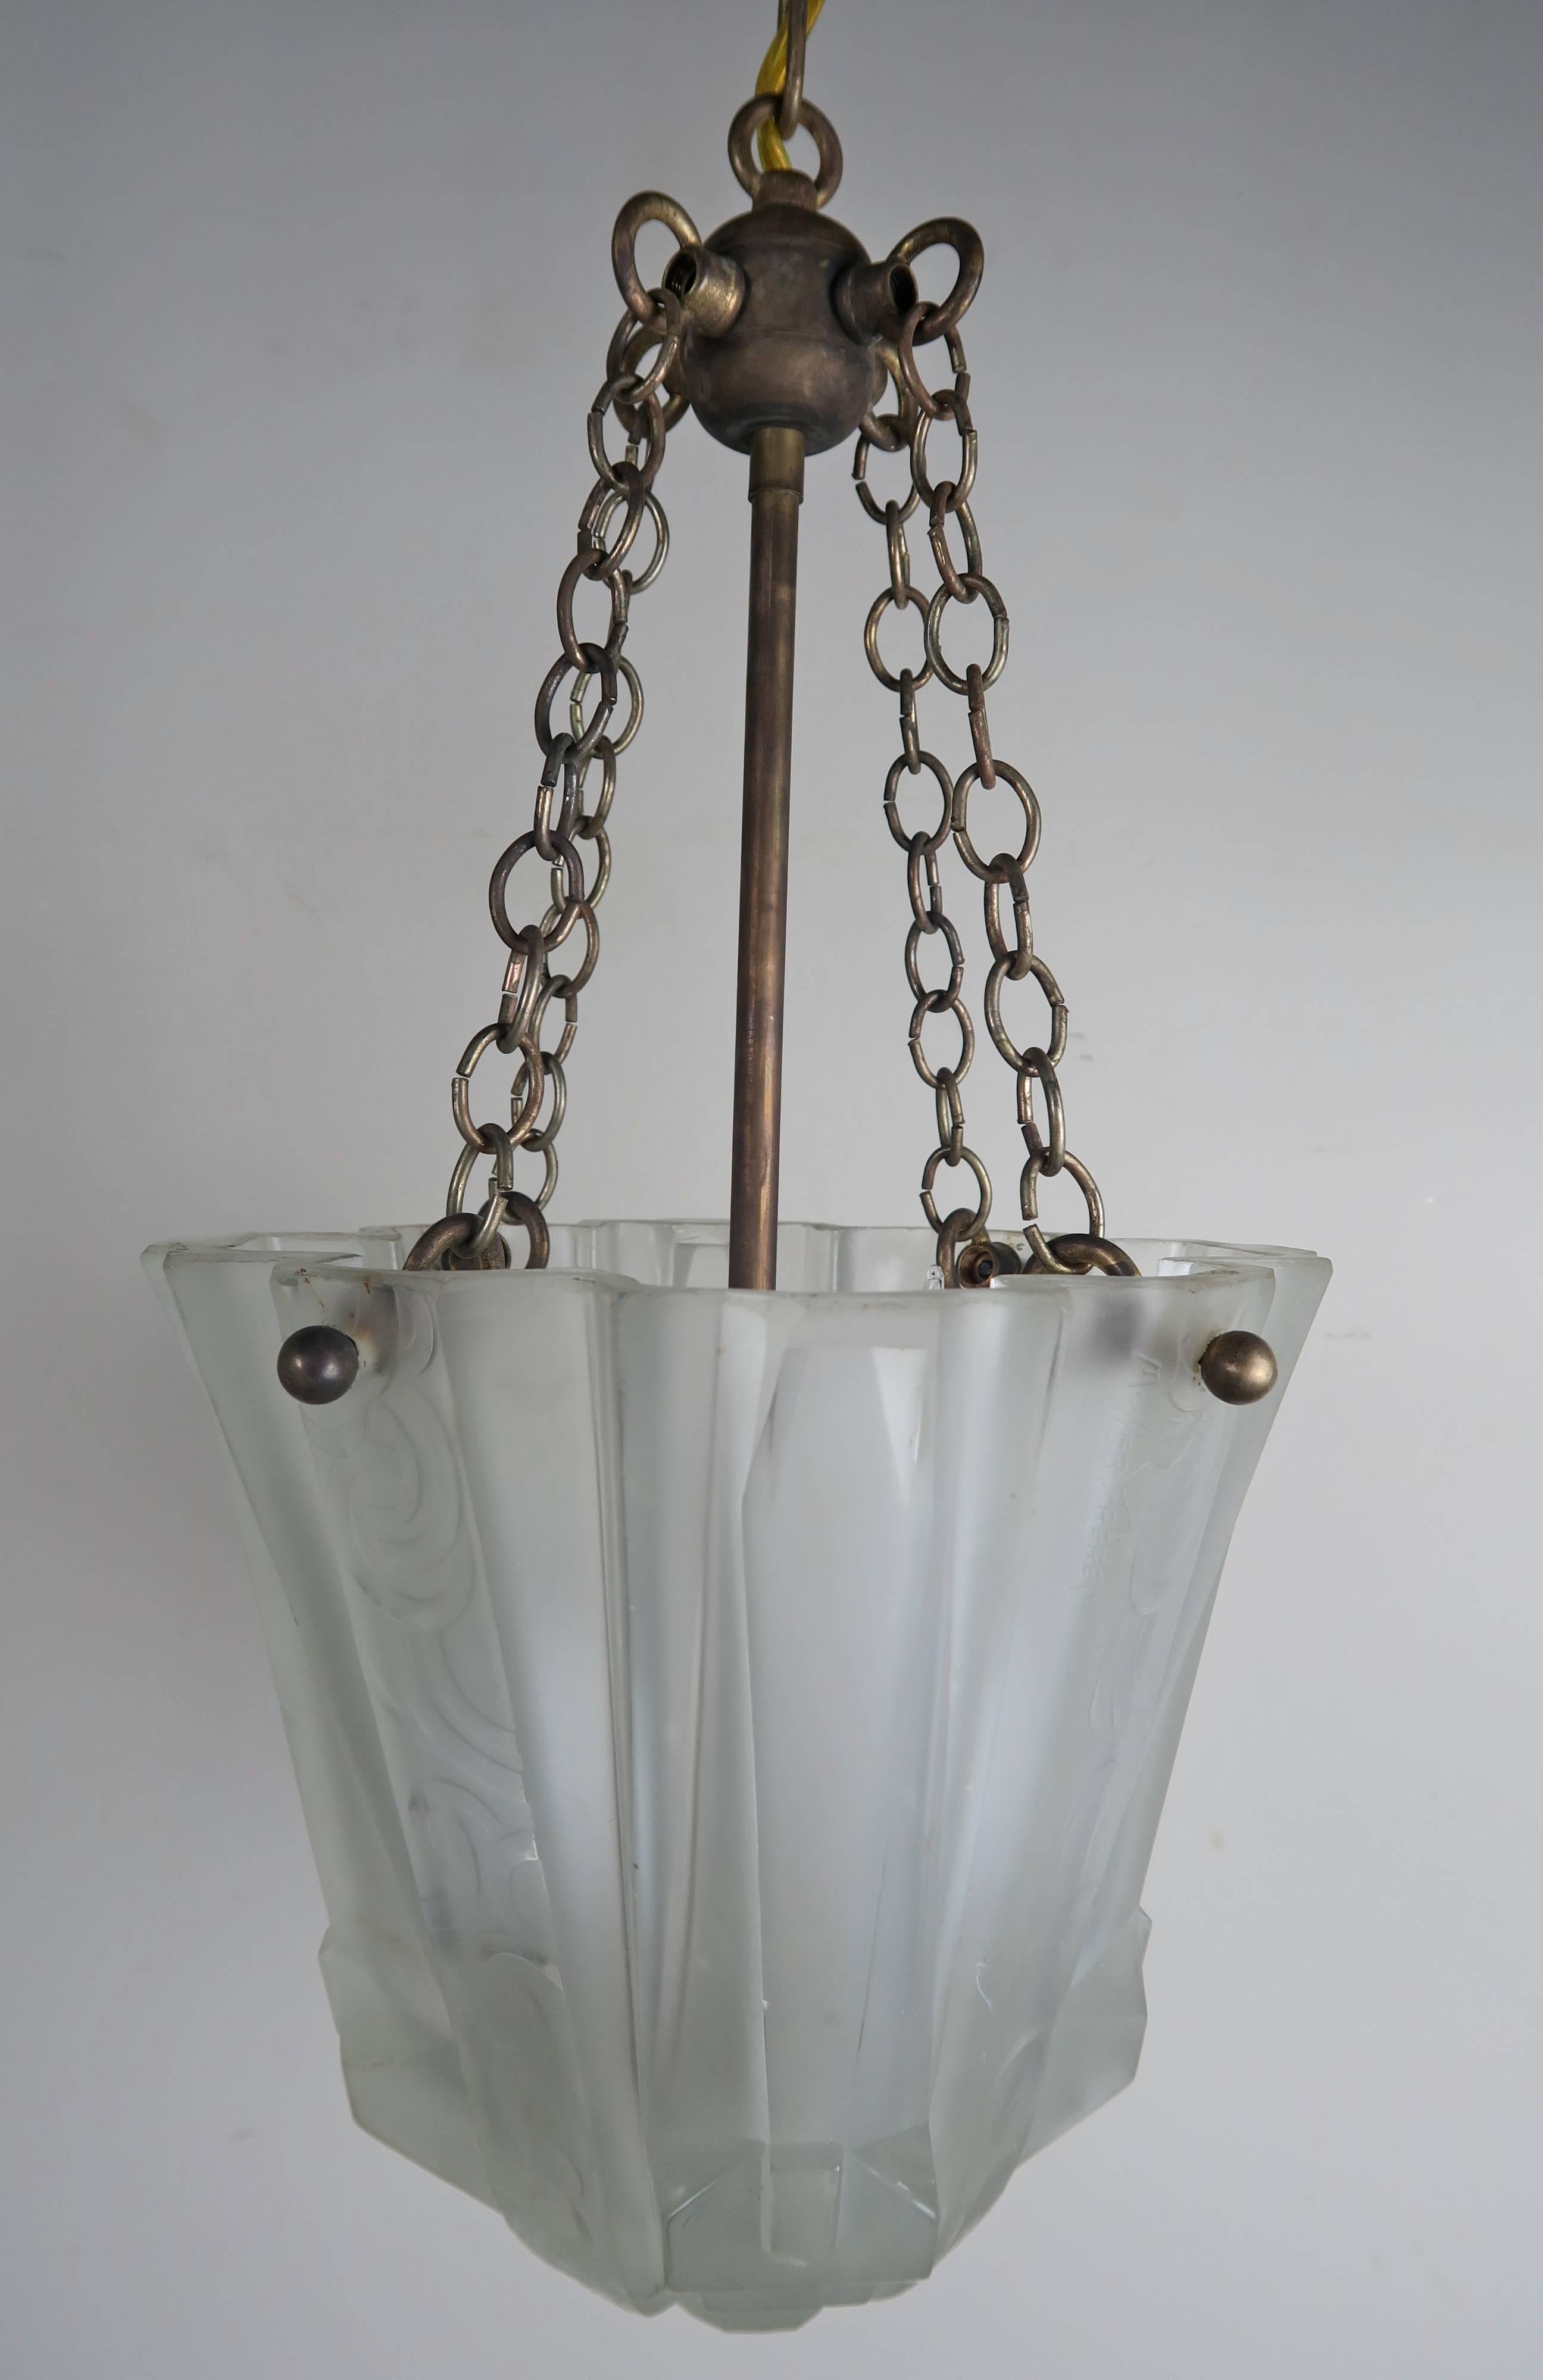 Pair of Art Nouveau Hanging Light Fixtures 1